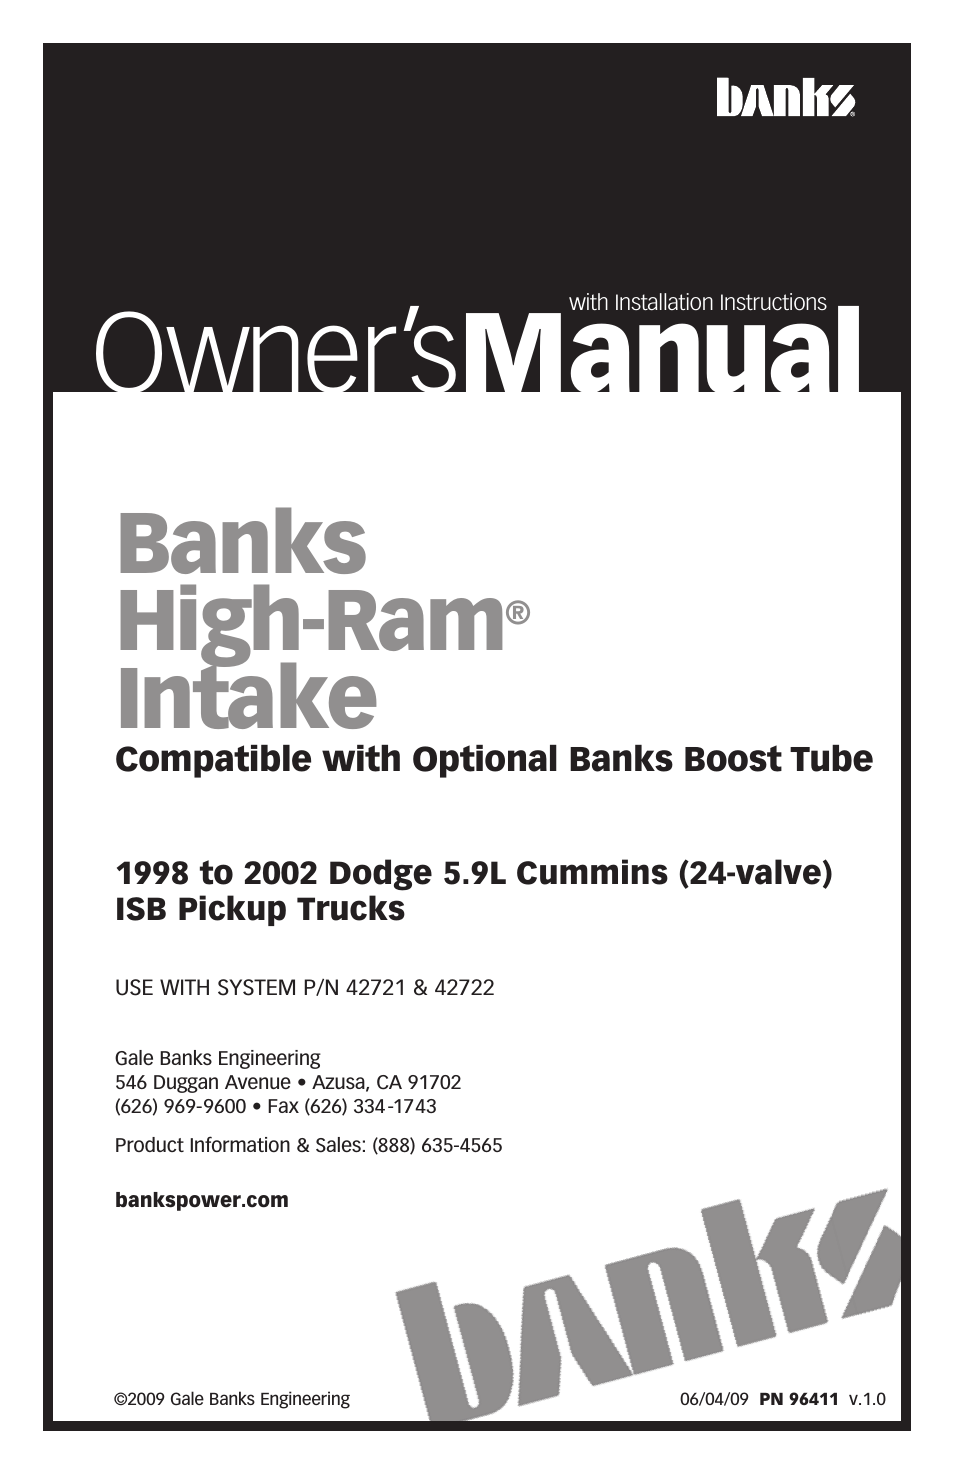 Dodge Trucks: (Diesel ’98 - 02 5.9L Cummins ISB) Intake- High-Ram Intake System, '98-02 Compatible w_Optional Banks Boost Tube